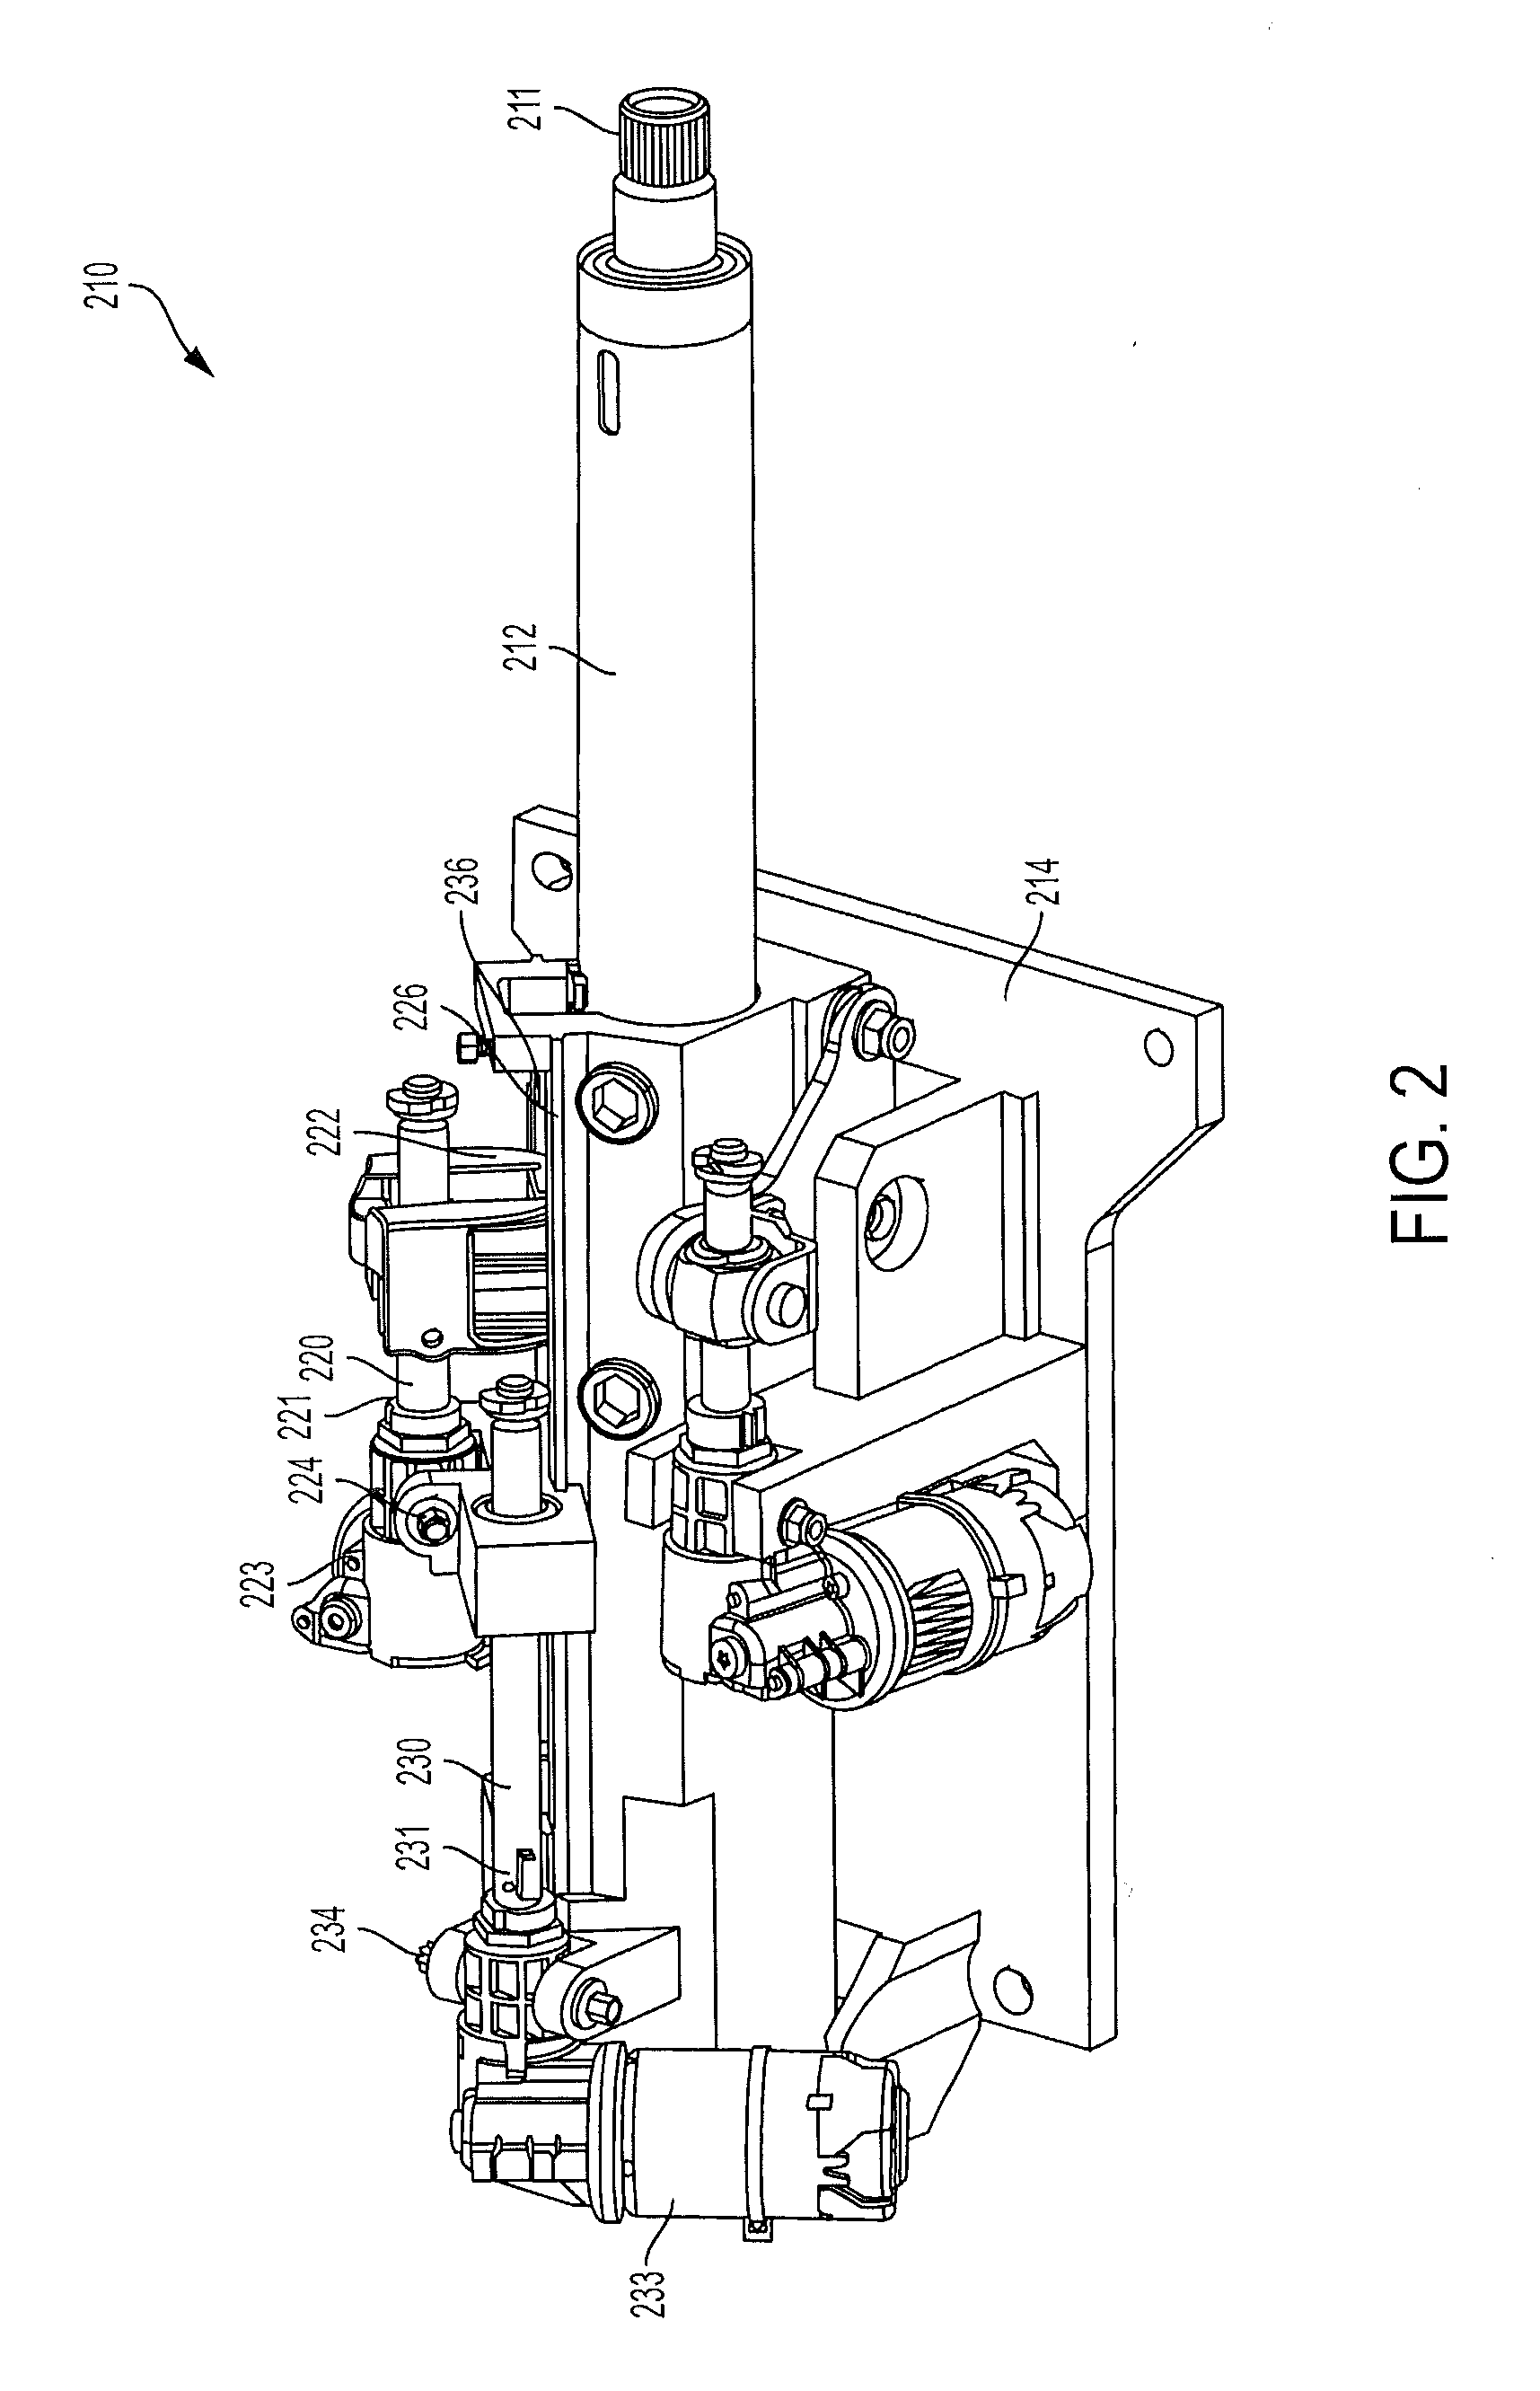 Retractable steering column with dual actuators